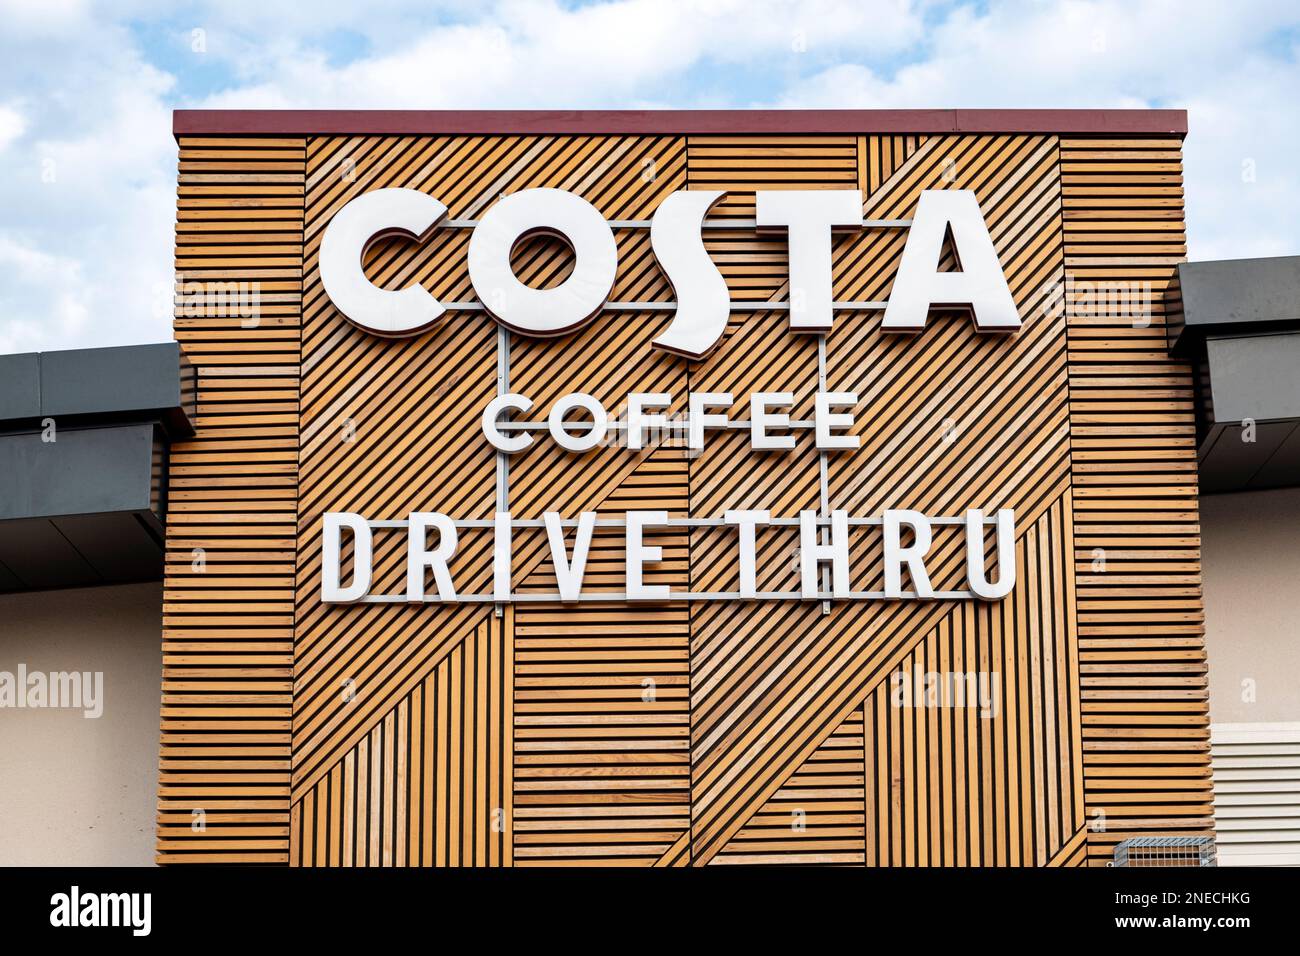 Costa coffee drive thru sign UK Stock Photo